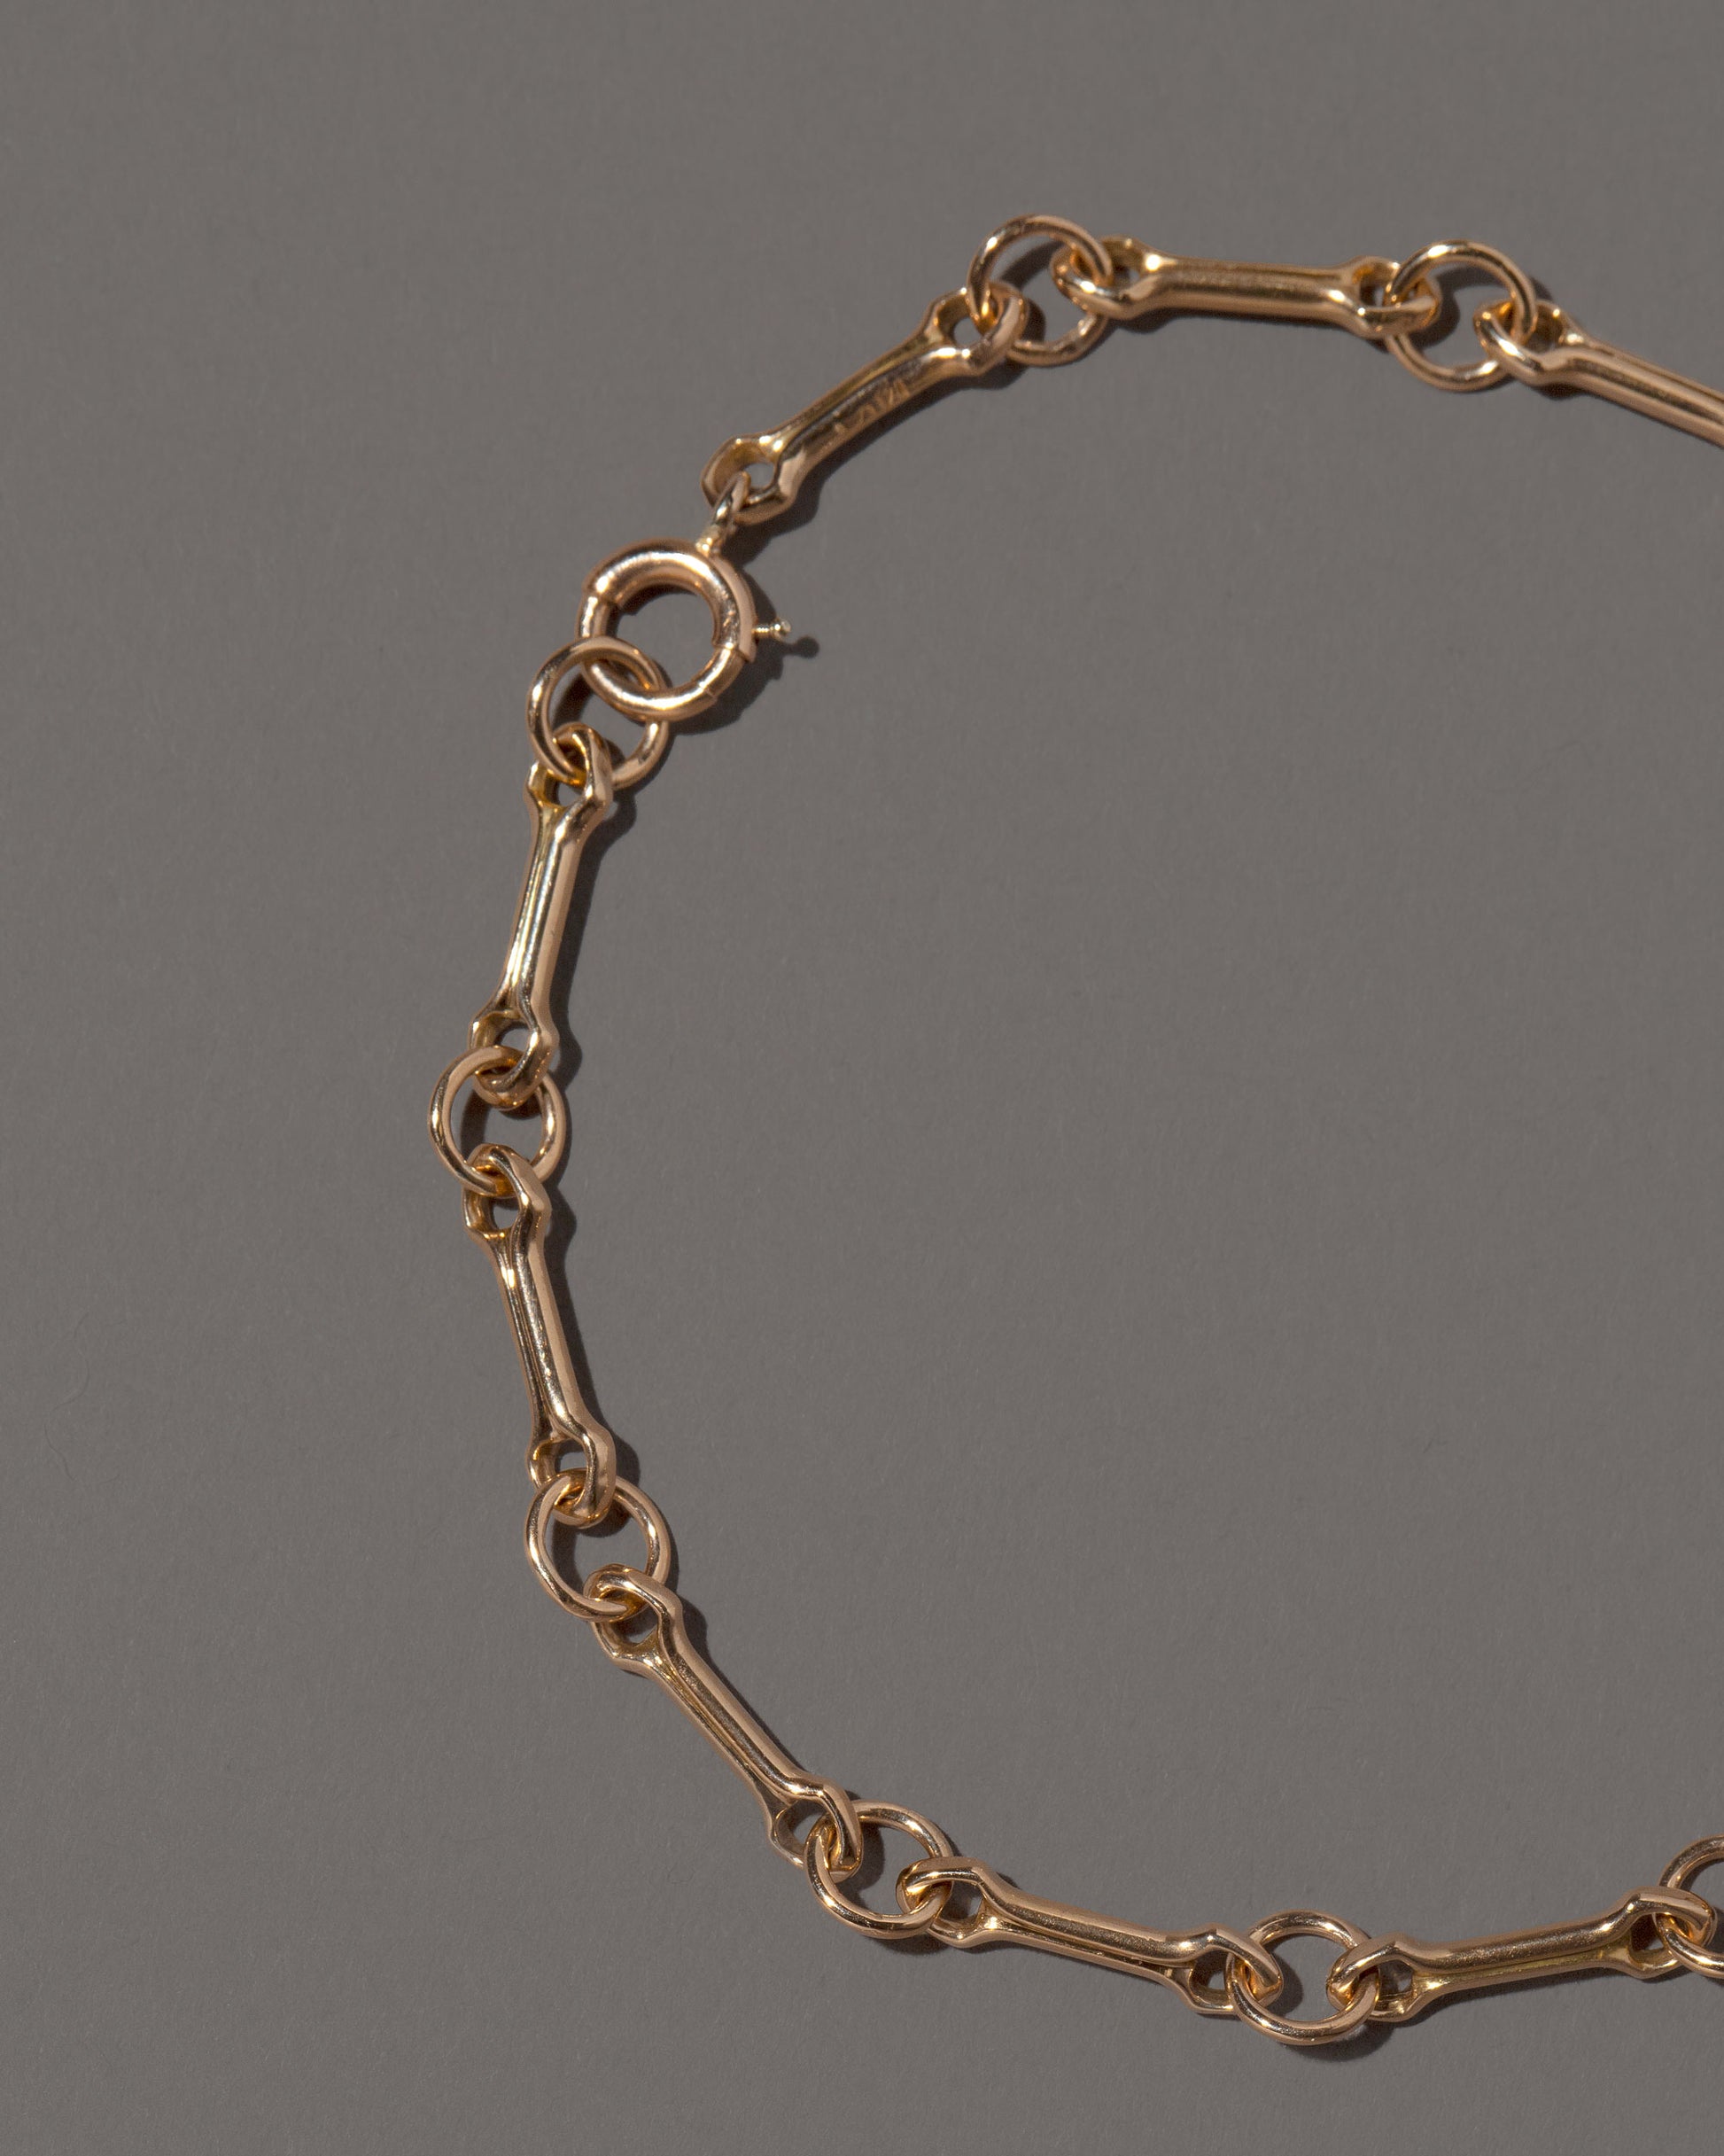 Closeup details of the Bar Link Charm Chain Bracelet on light color background.